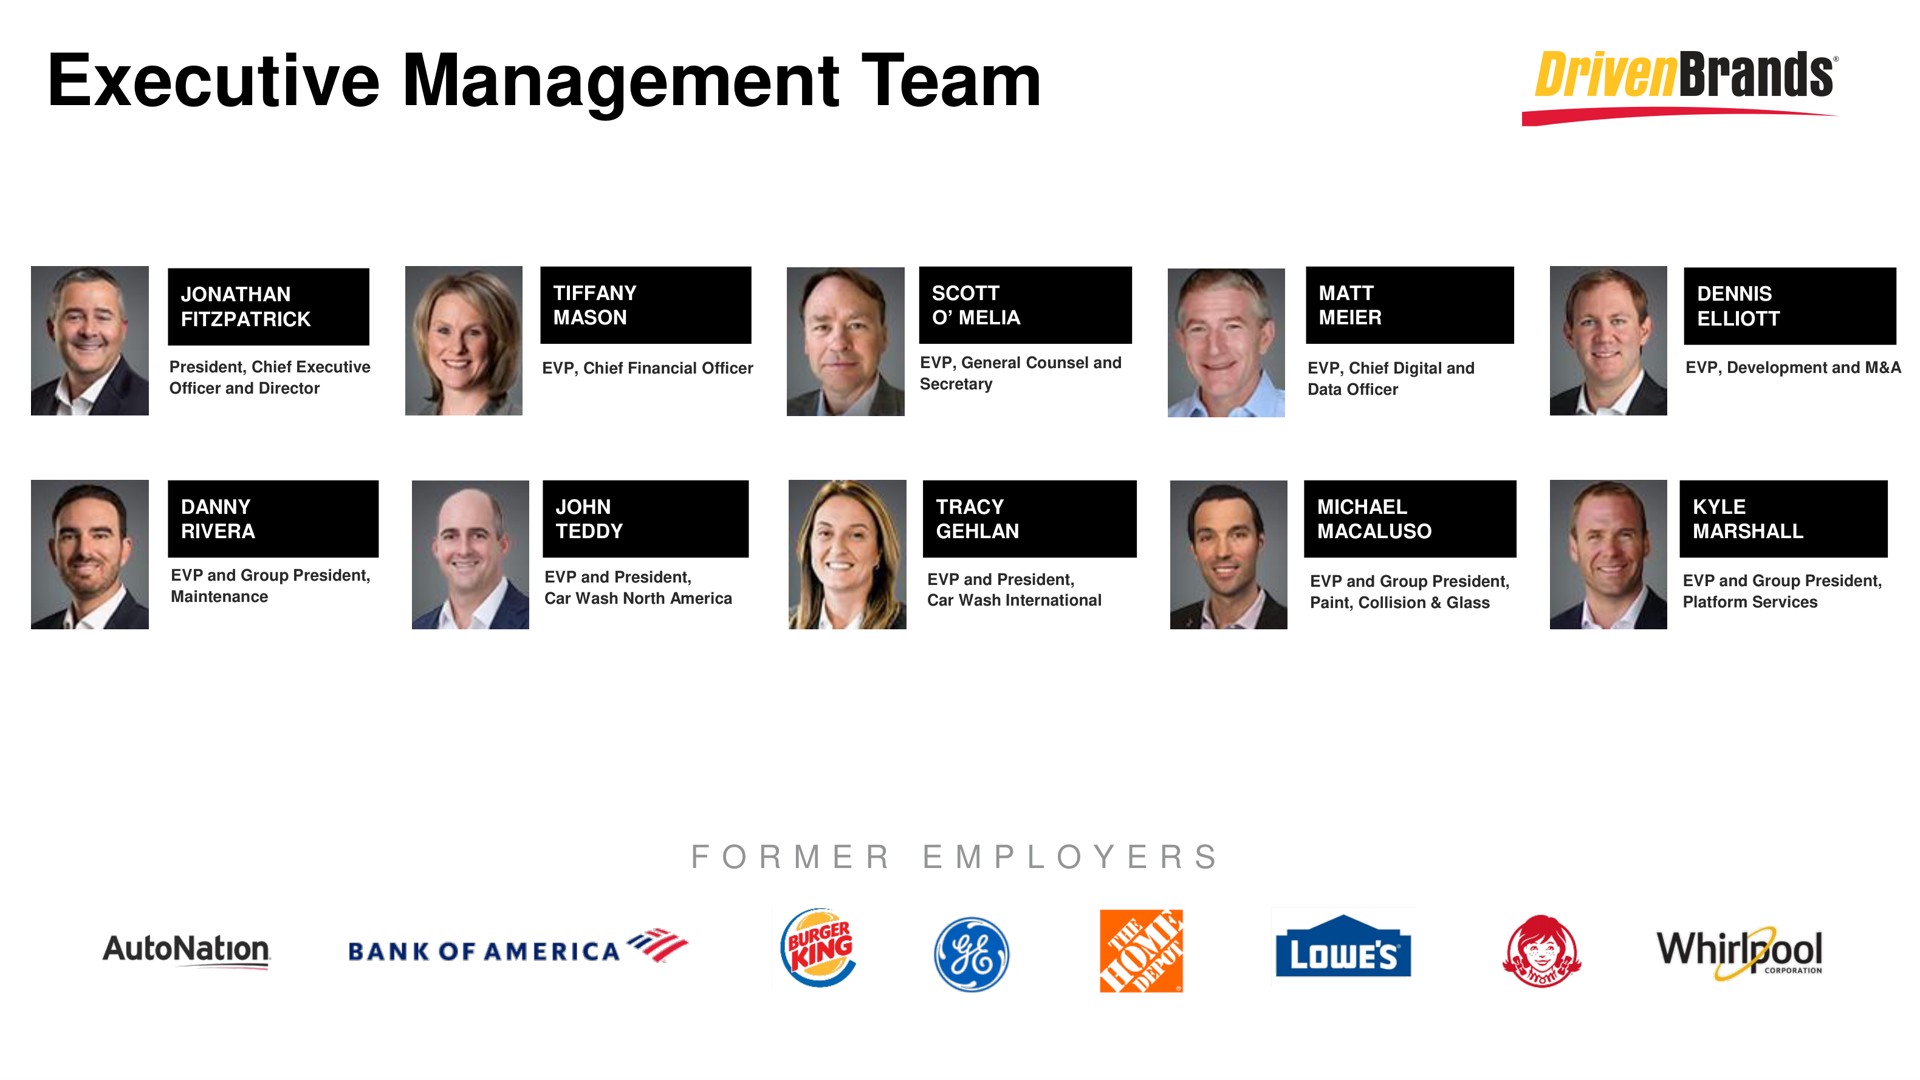 executive management team | DrivenBrands